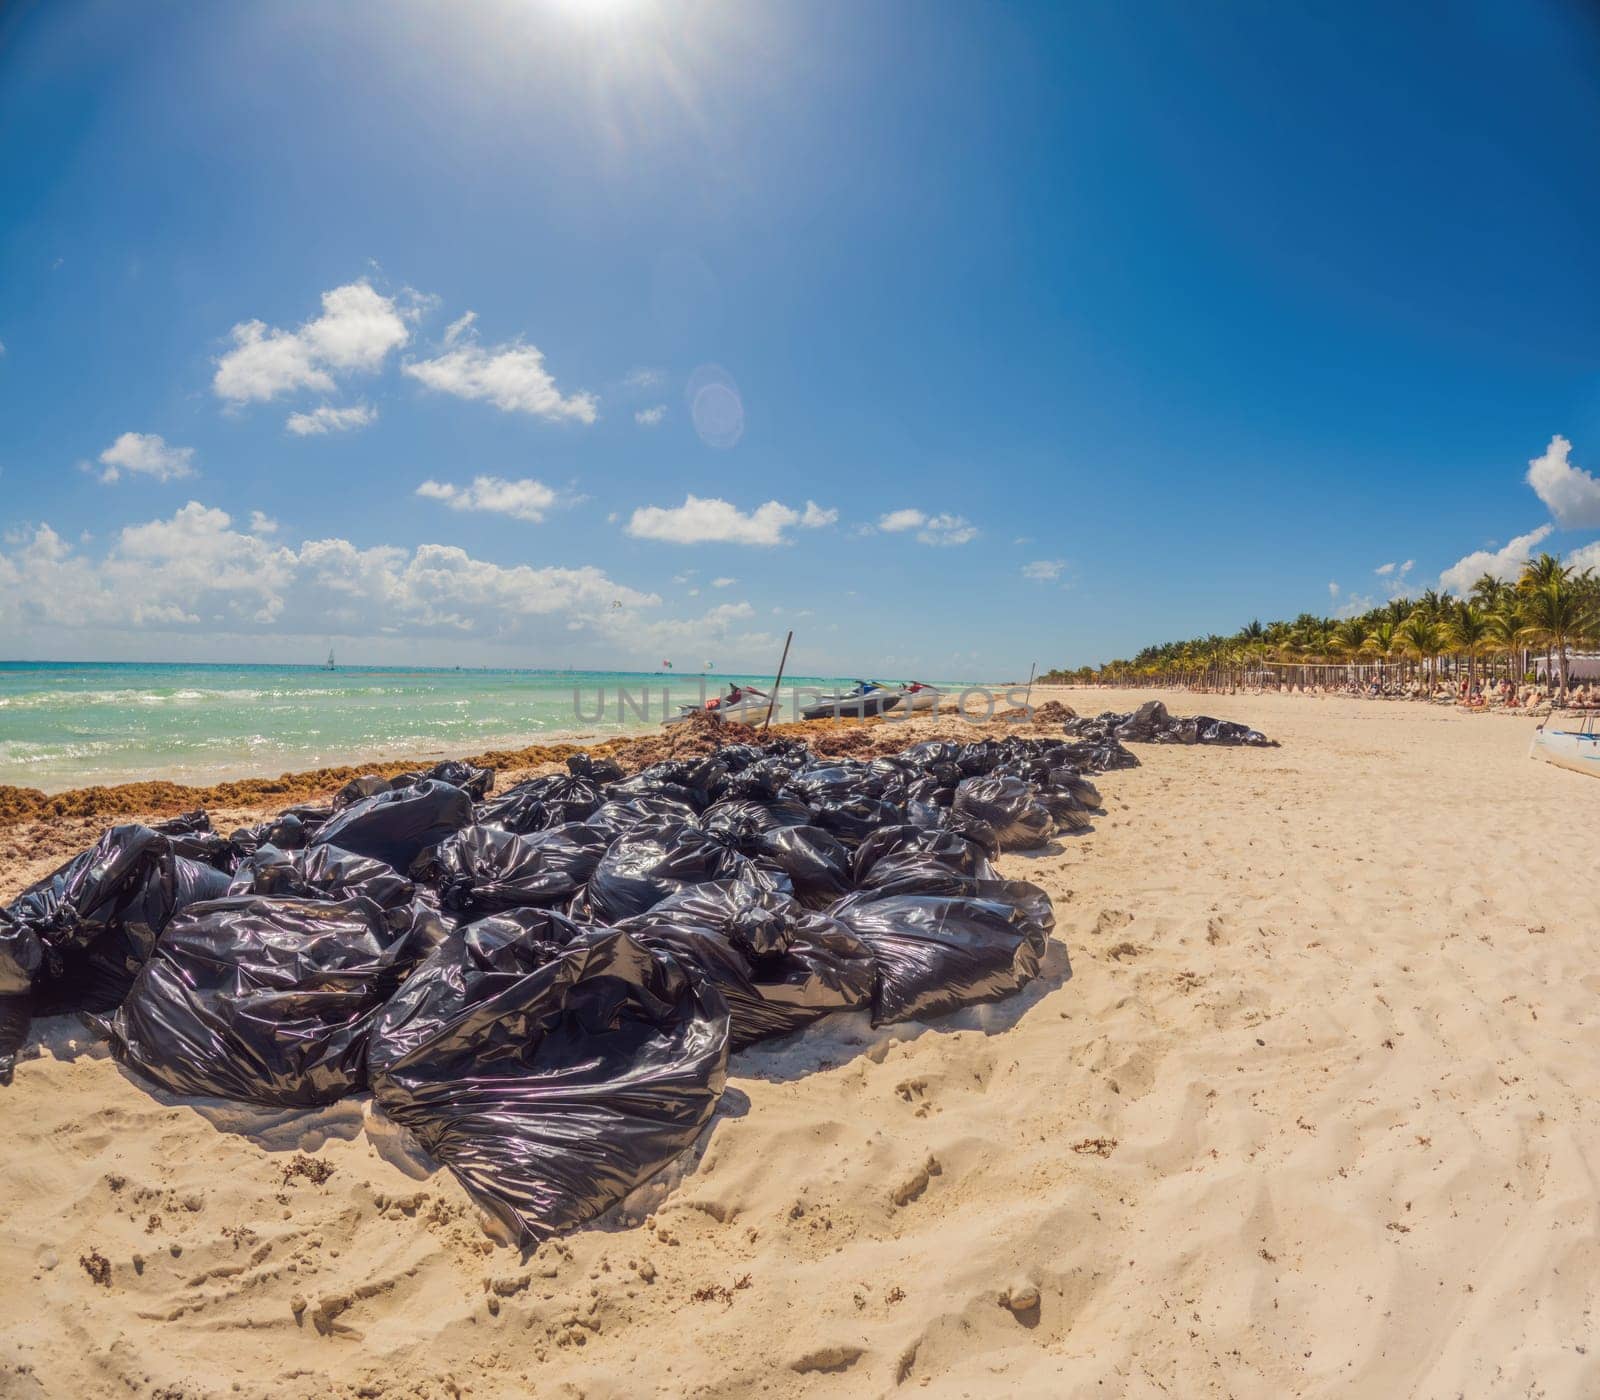 The beautiful Caribbean beach totally filthy and dirty the nasty seaweed sargazo problem in Playa del Carmen Quintana Roo Mexico by galitskaya